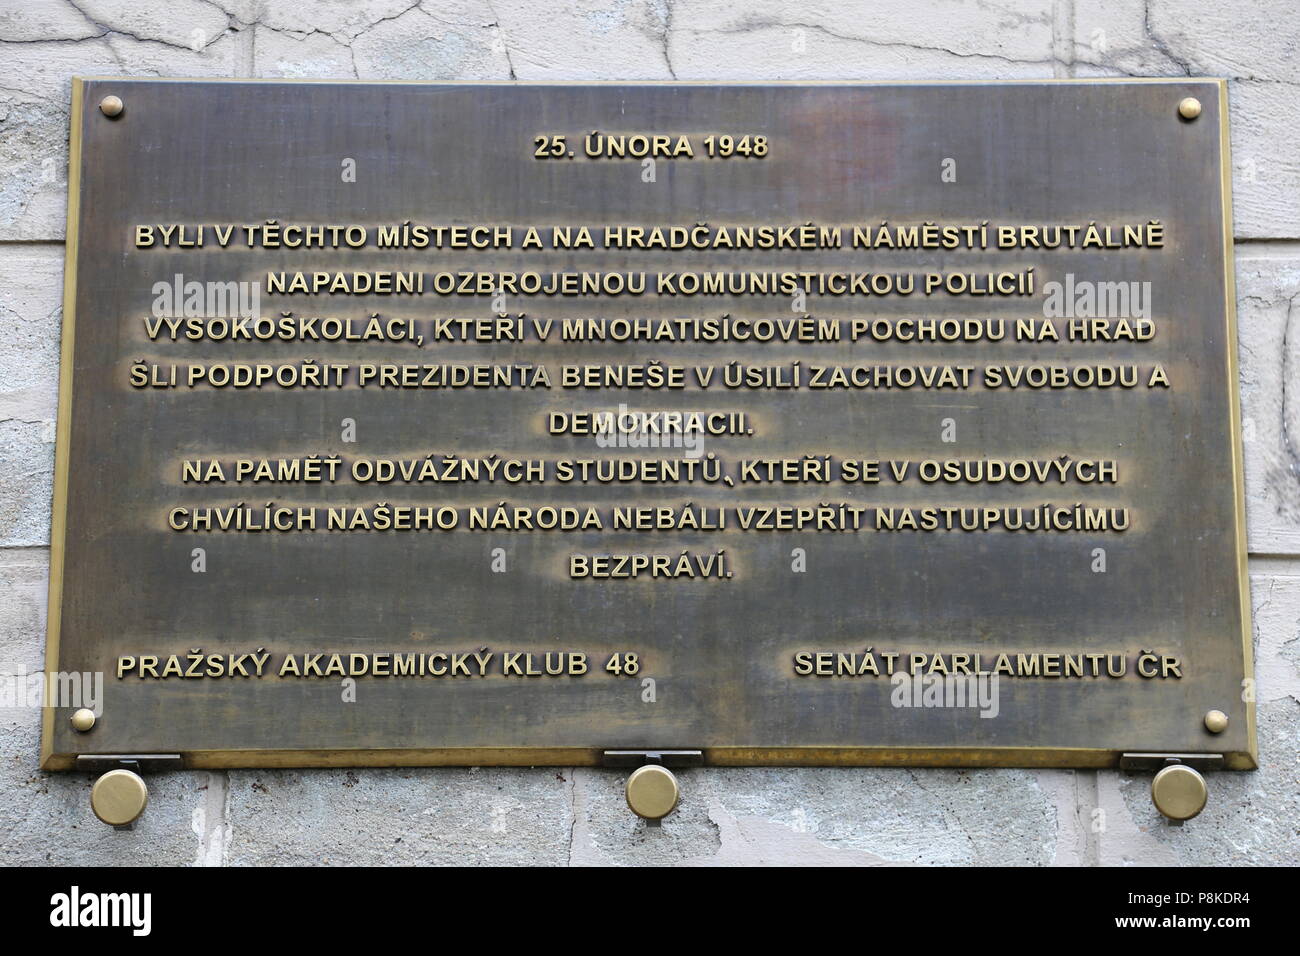 Plaque commemorating the 1948 student protests (see additional info). Nerudova, Malá Strana (Little Quarter), Prague, Czechia (Czech Republic), Europe Stock Photo